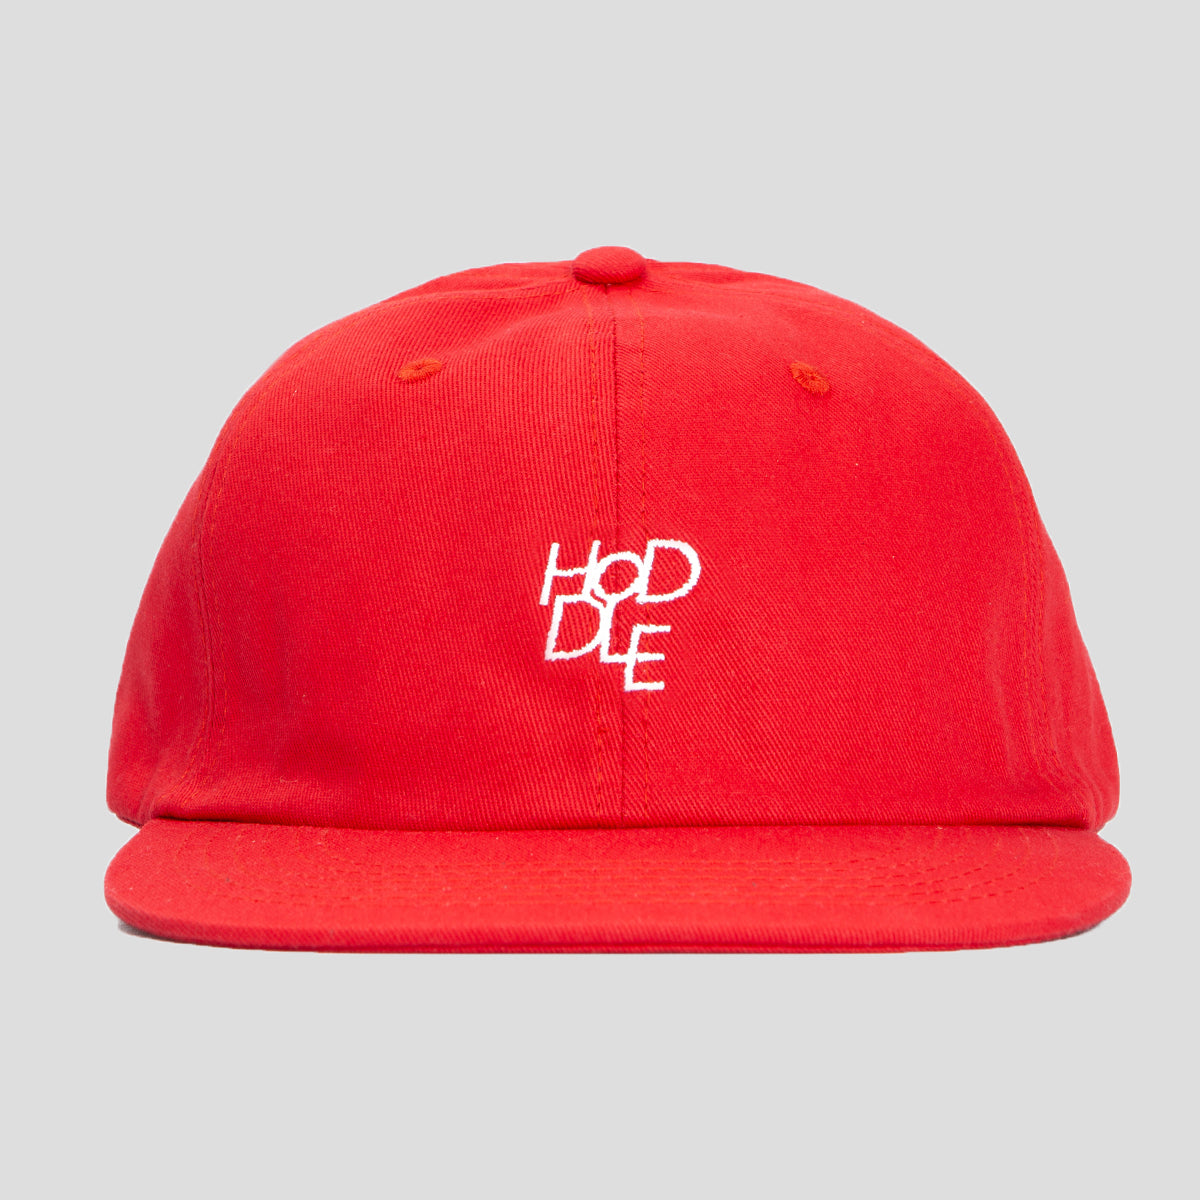 HODDLE "LOGO" CAP RED